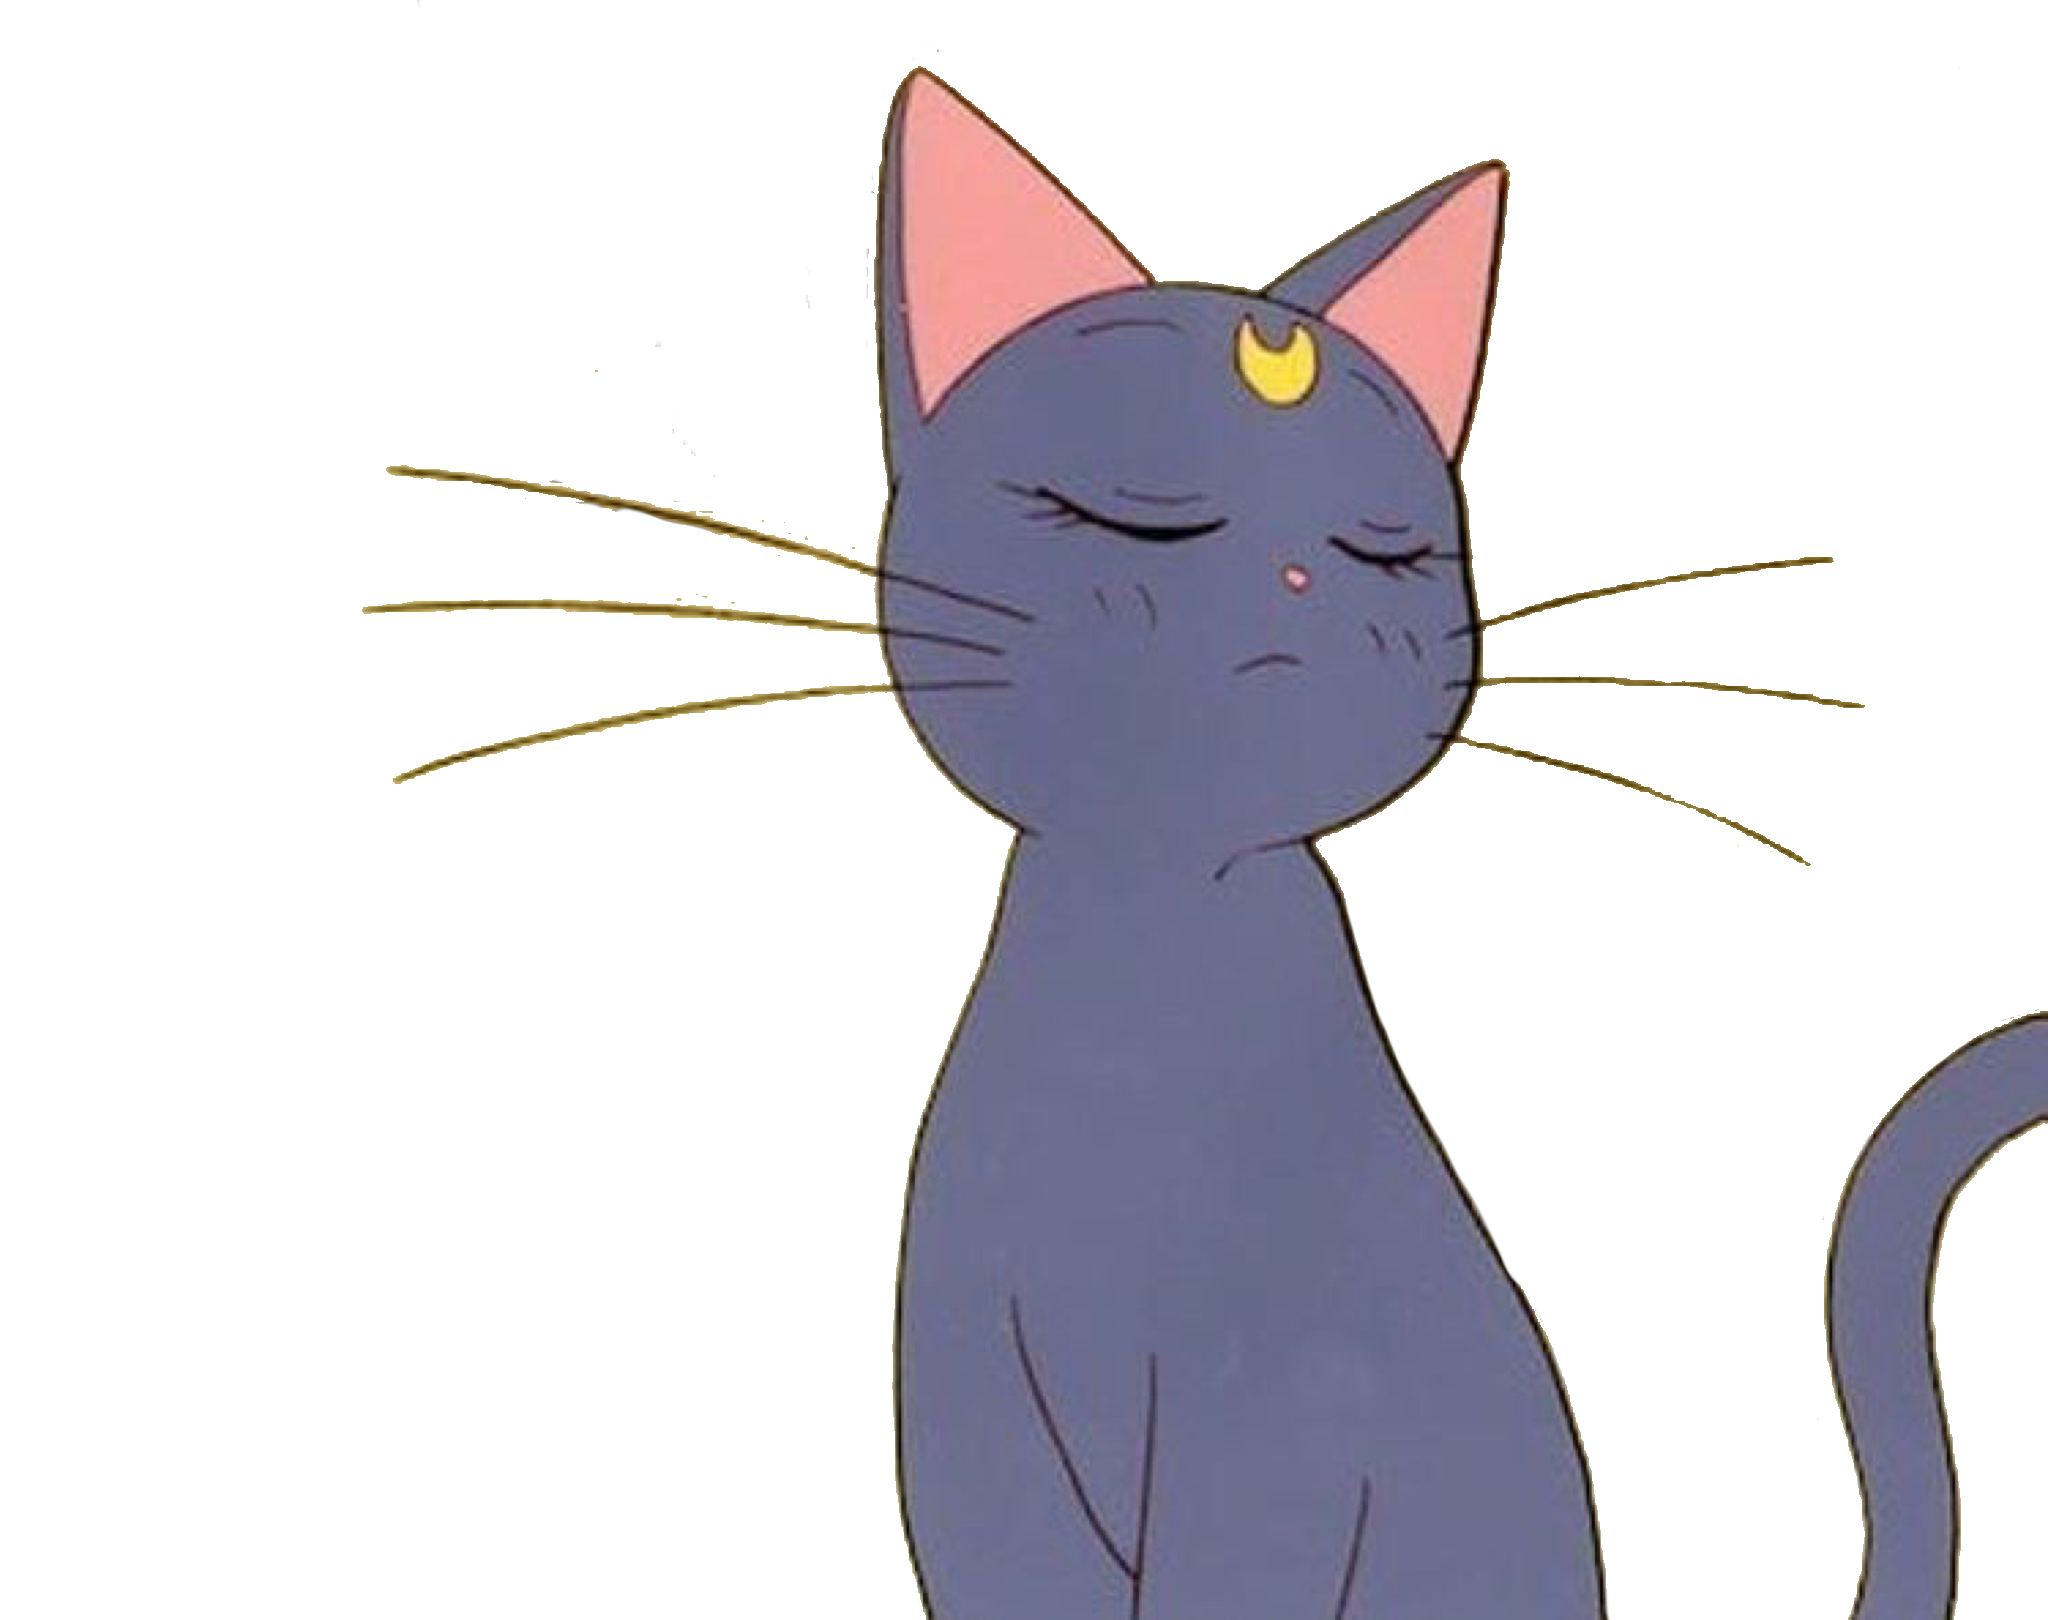 Free Download Theme Image Wallpaper Bacground Anime Cat